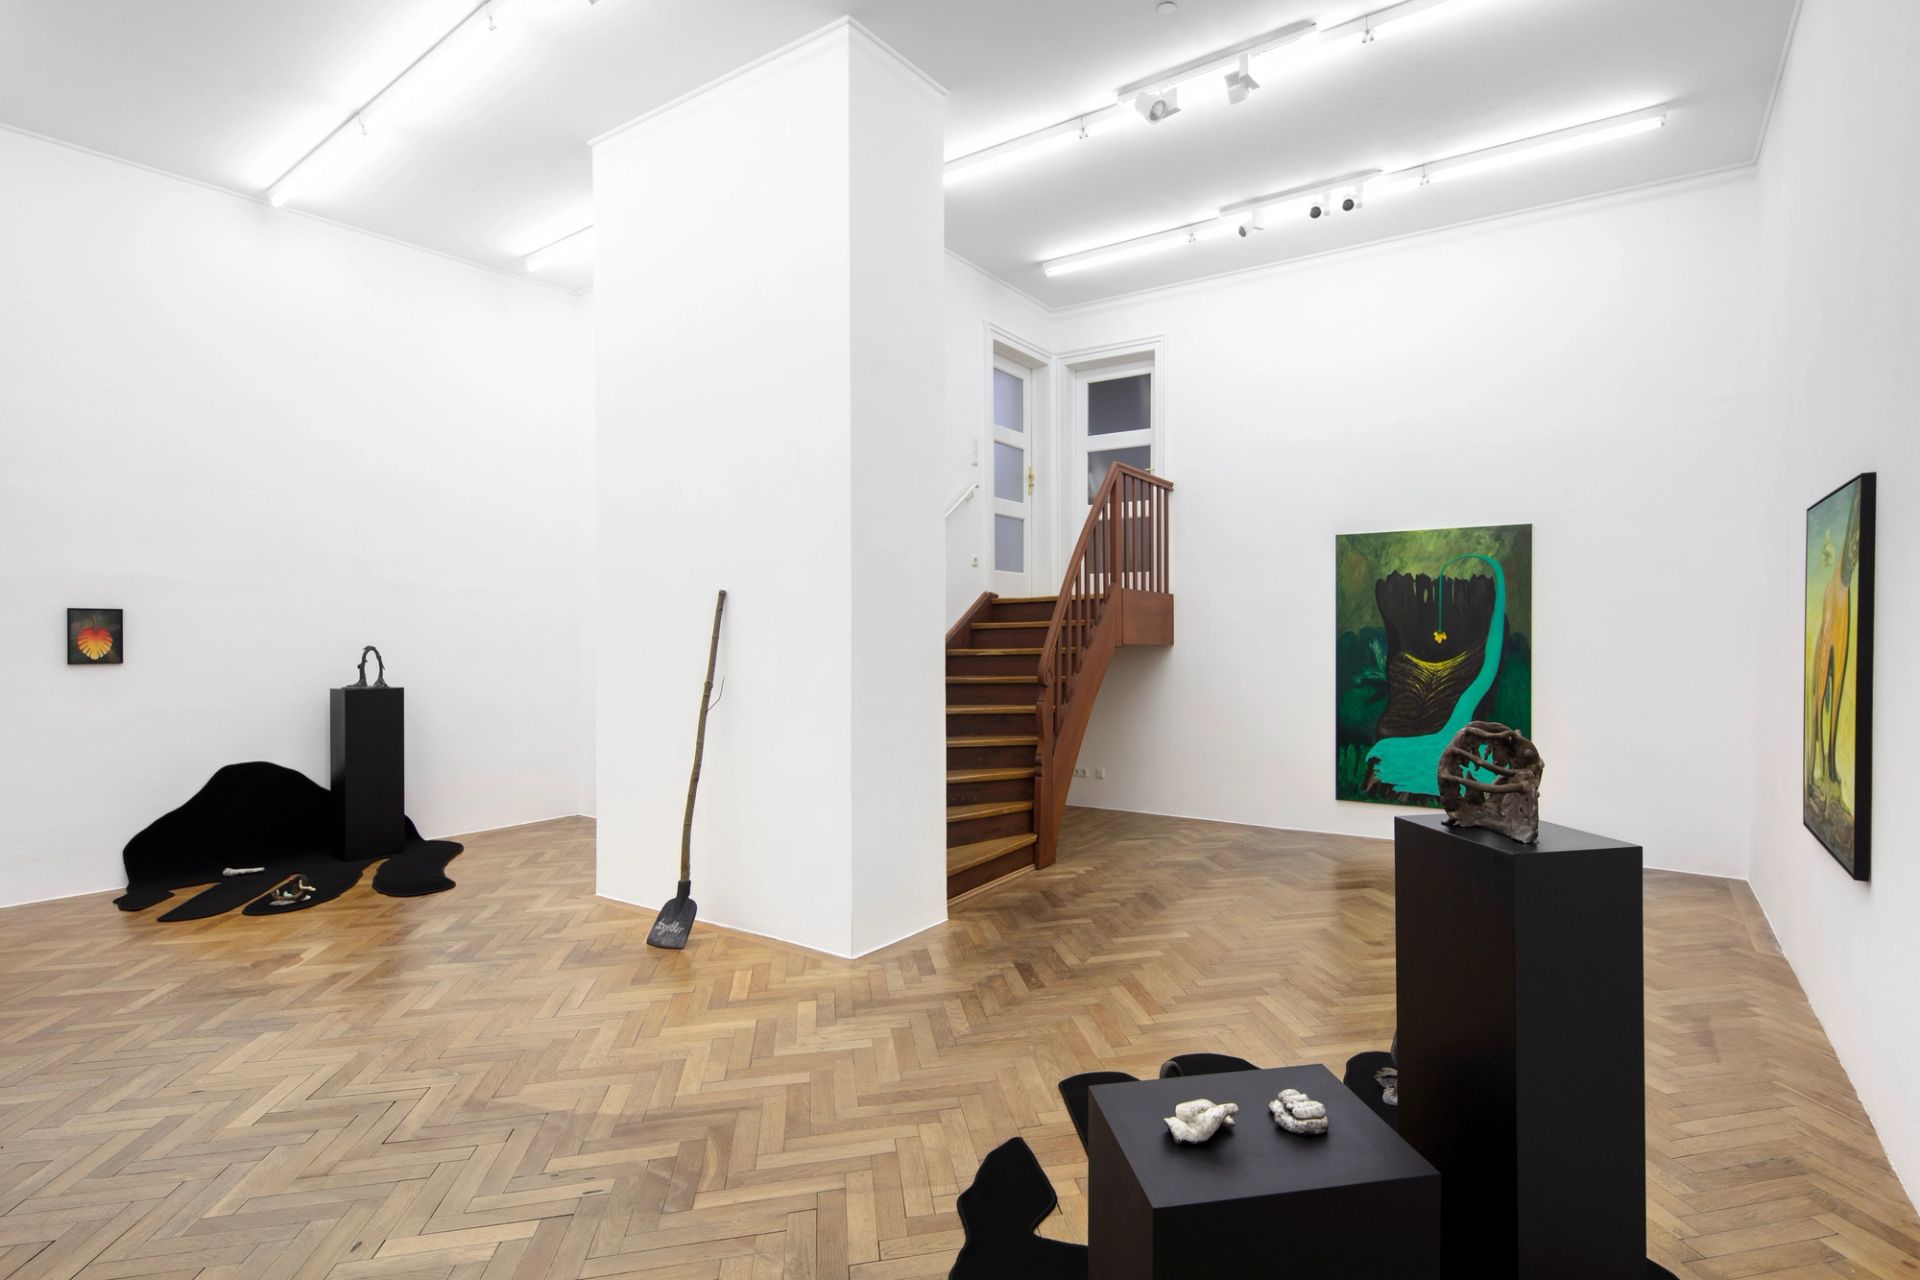 Veronika Hilger, Perpetual Dawn, 2023, installation view at Sperling, Munich, photo: Sebastian Kissel